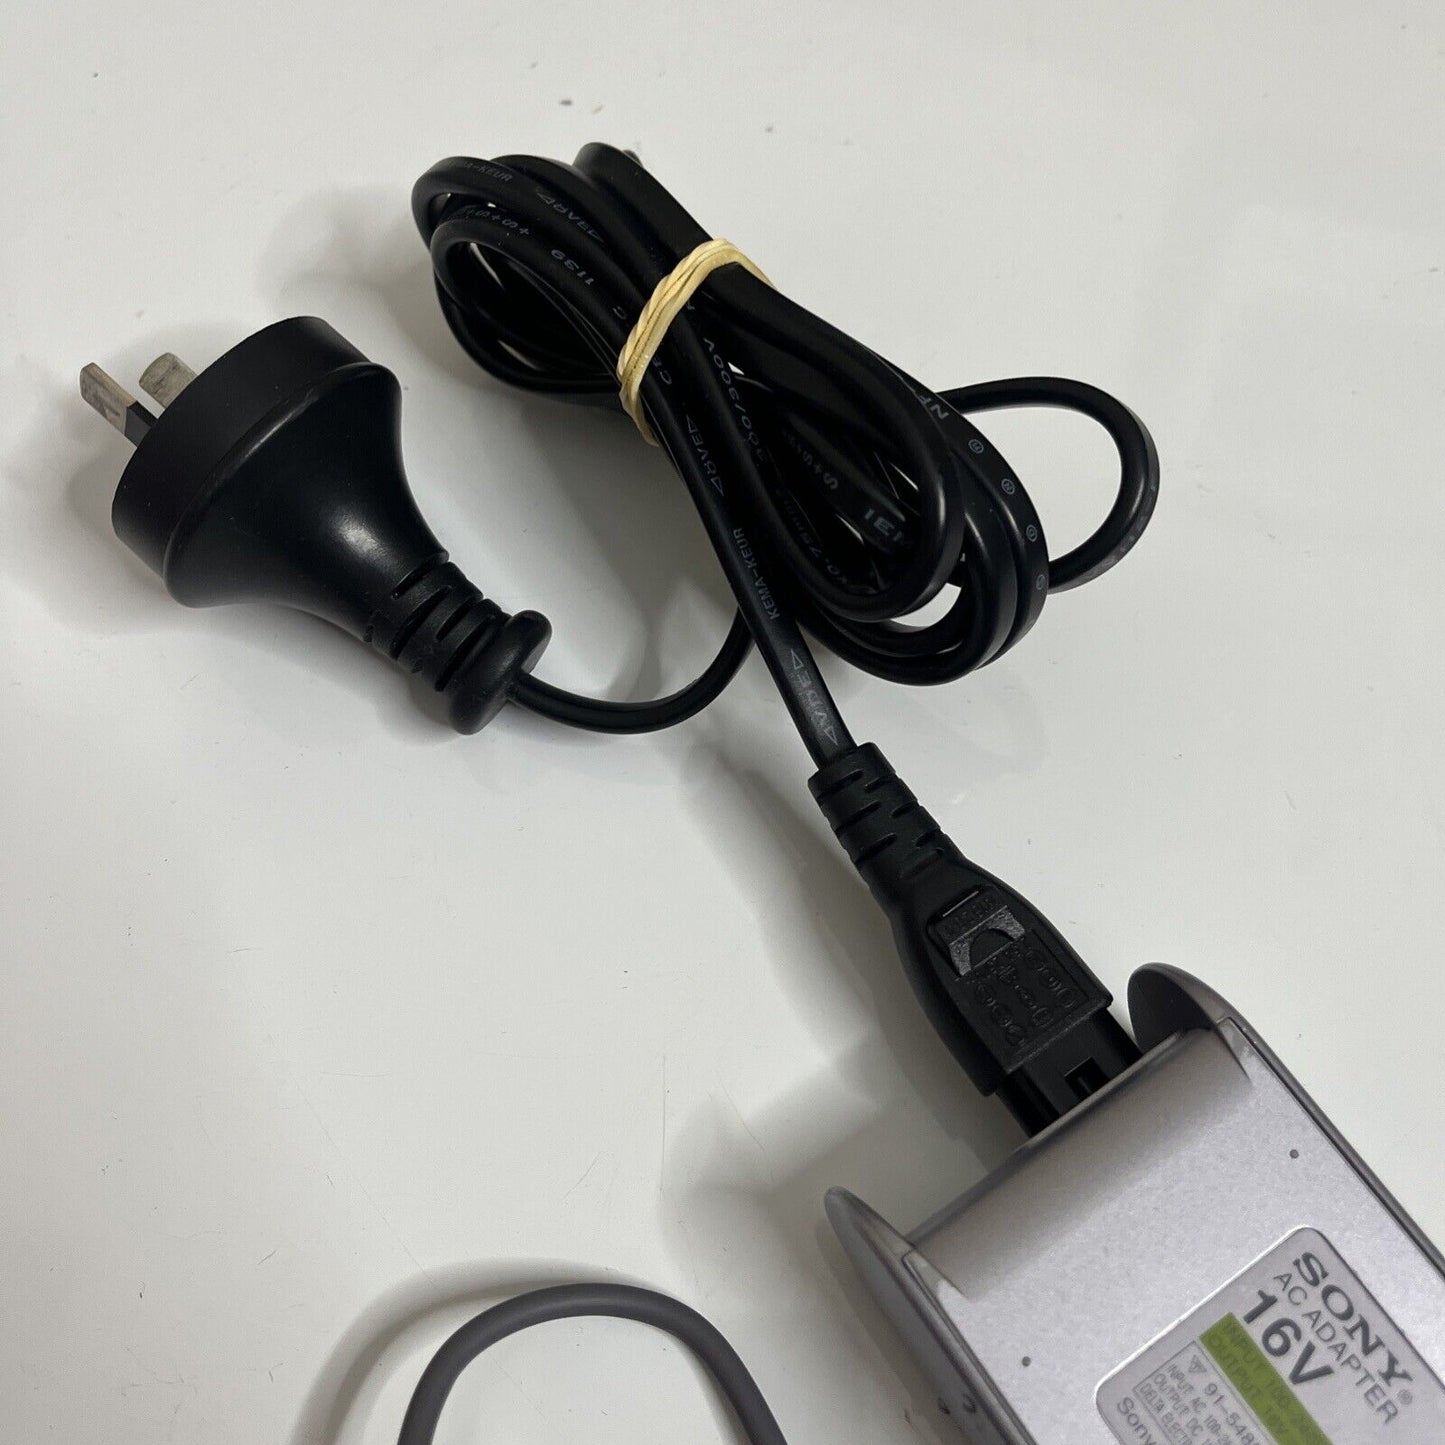 Sony VAIO Power Supply PCGA-AC5N AC Adapter 16V For VAIO Notebook